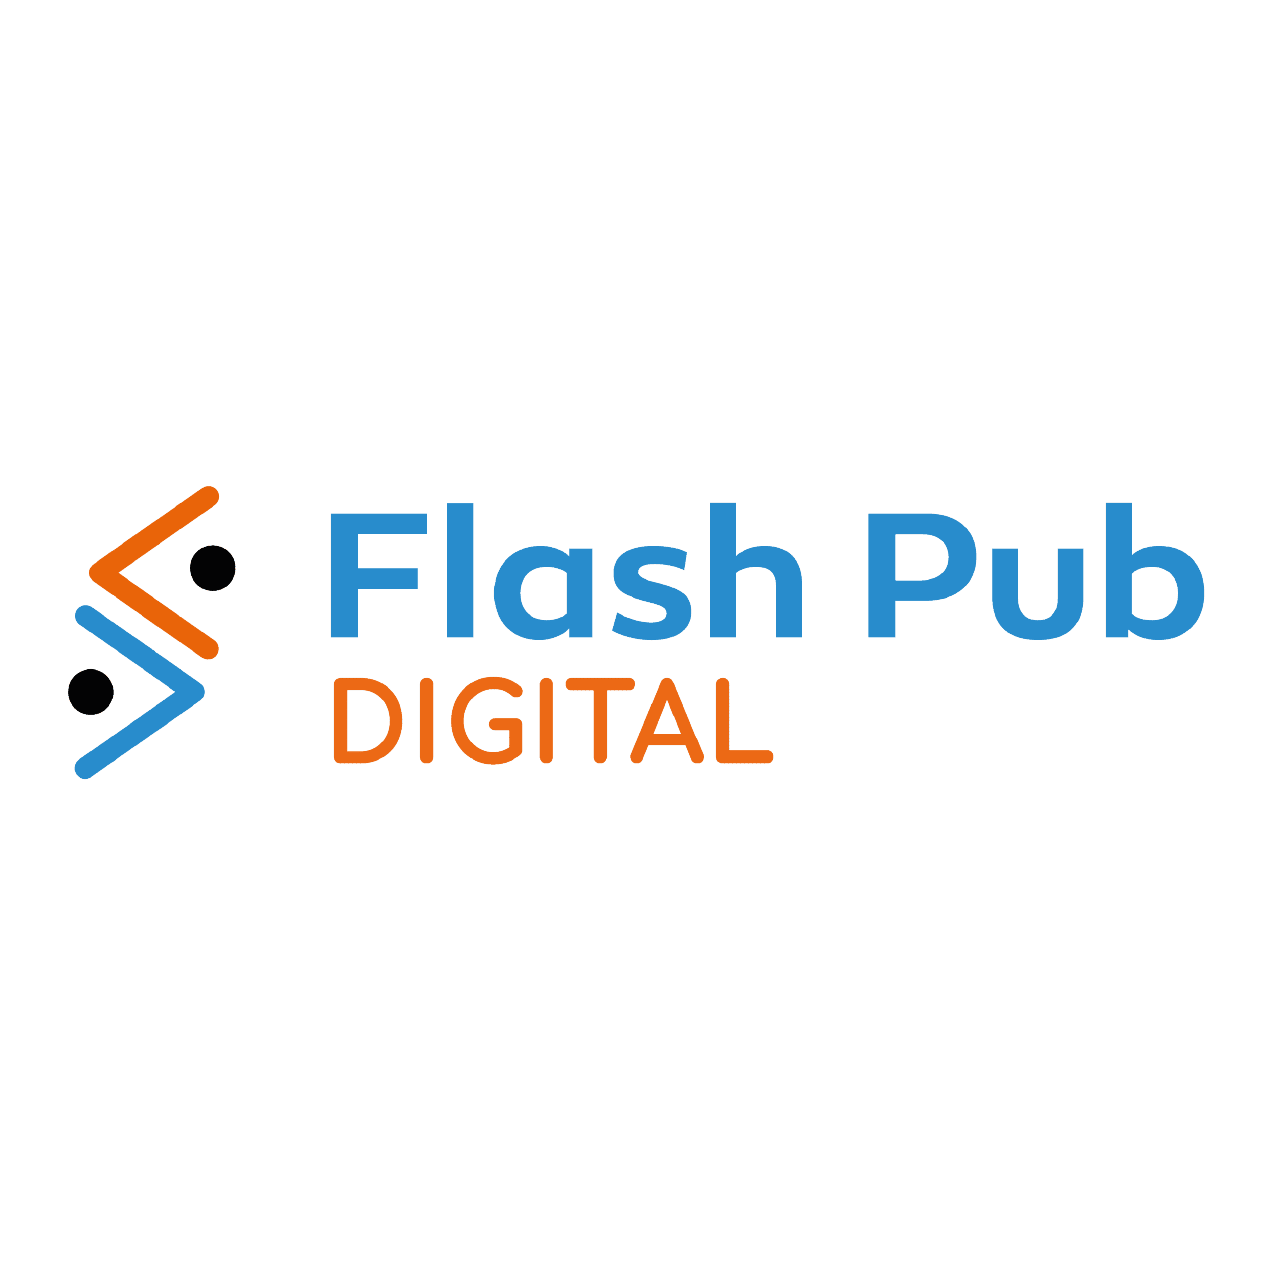 Flash Pub Communication